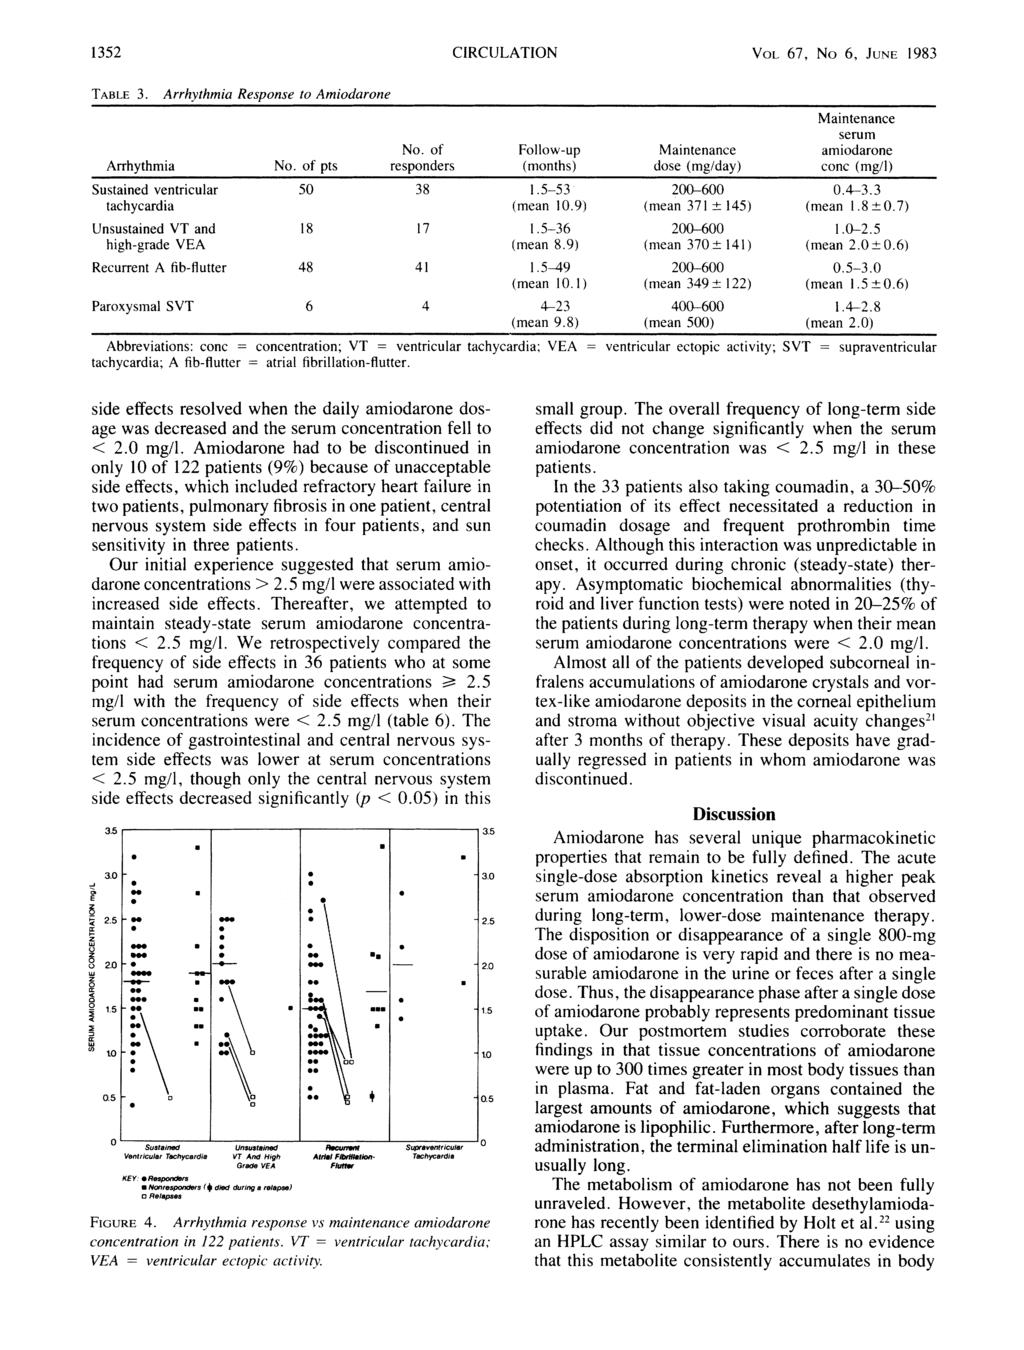 1352 CIRCIJLATION VOL 67, No 6, JUNE 1983 TABLE 3. Arrhythmia Response to Amiodarone Maintenance serum No. of Follow-up Maintenance amiodarone Arrhythmia No.